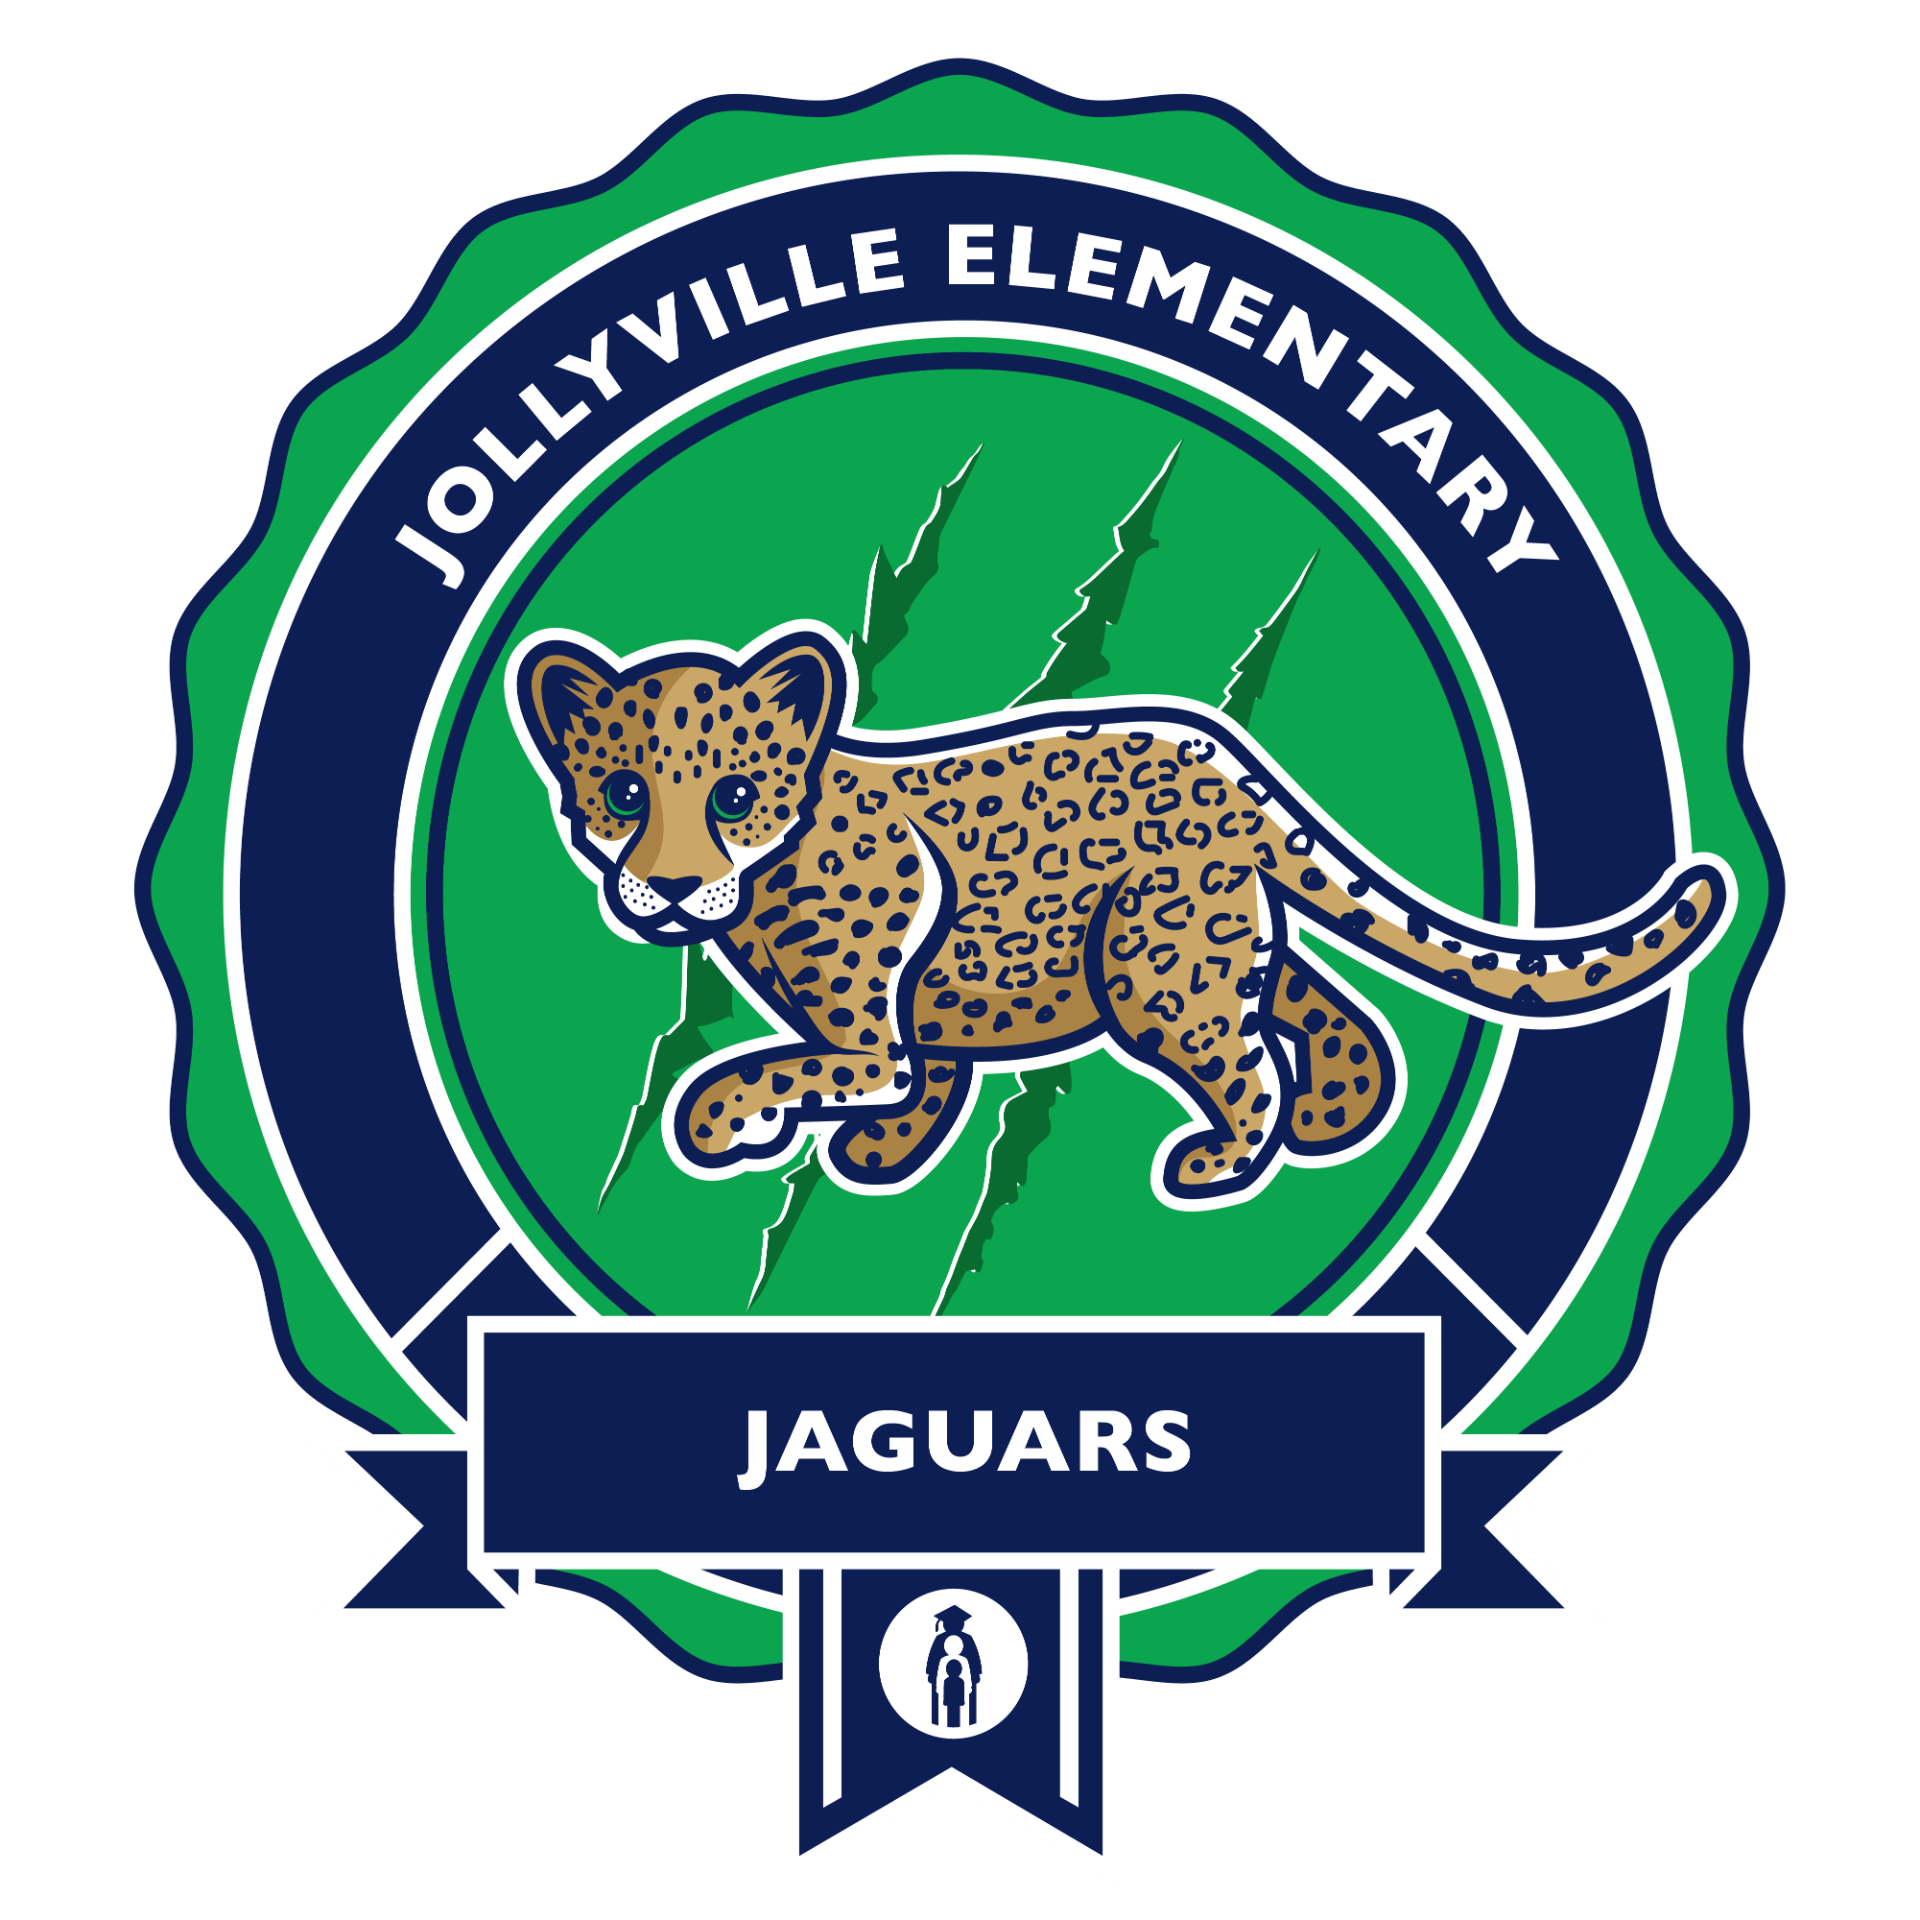 Jollyville Elementary School Logo - the Jaguars